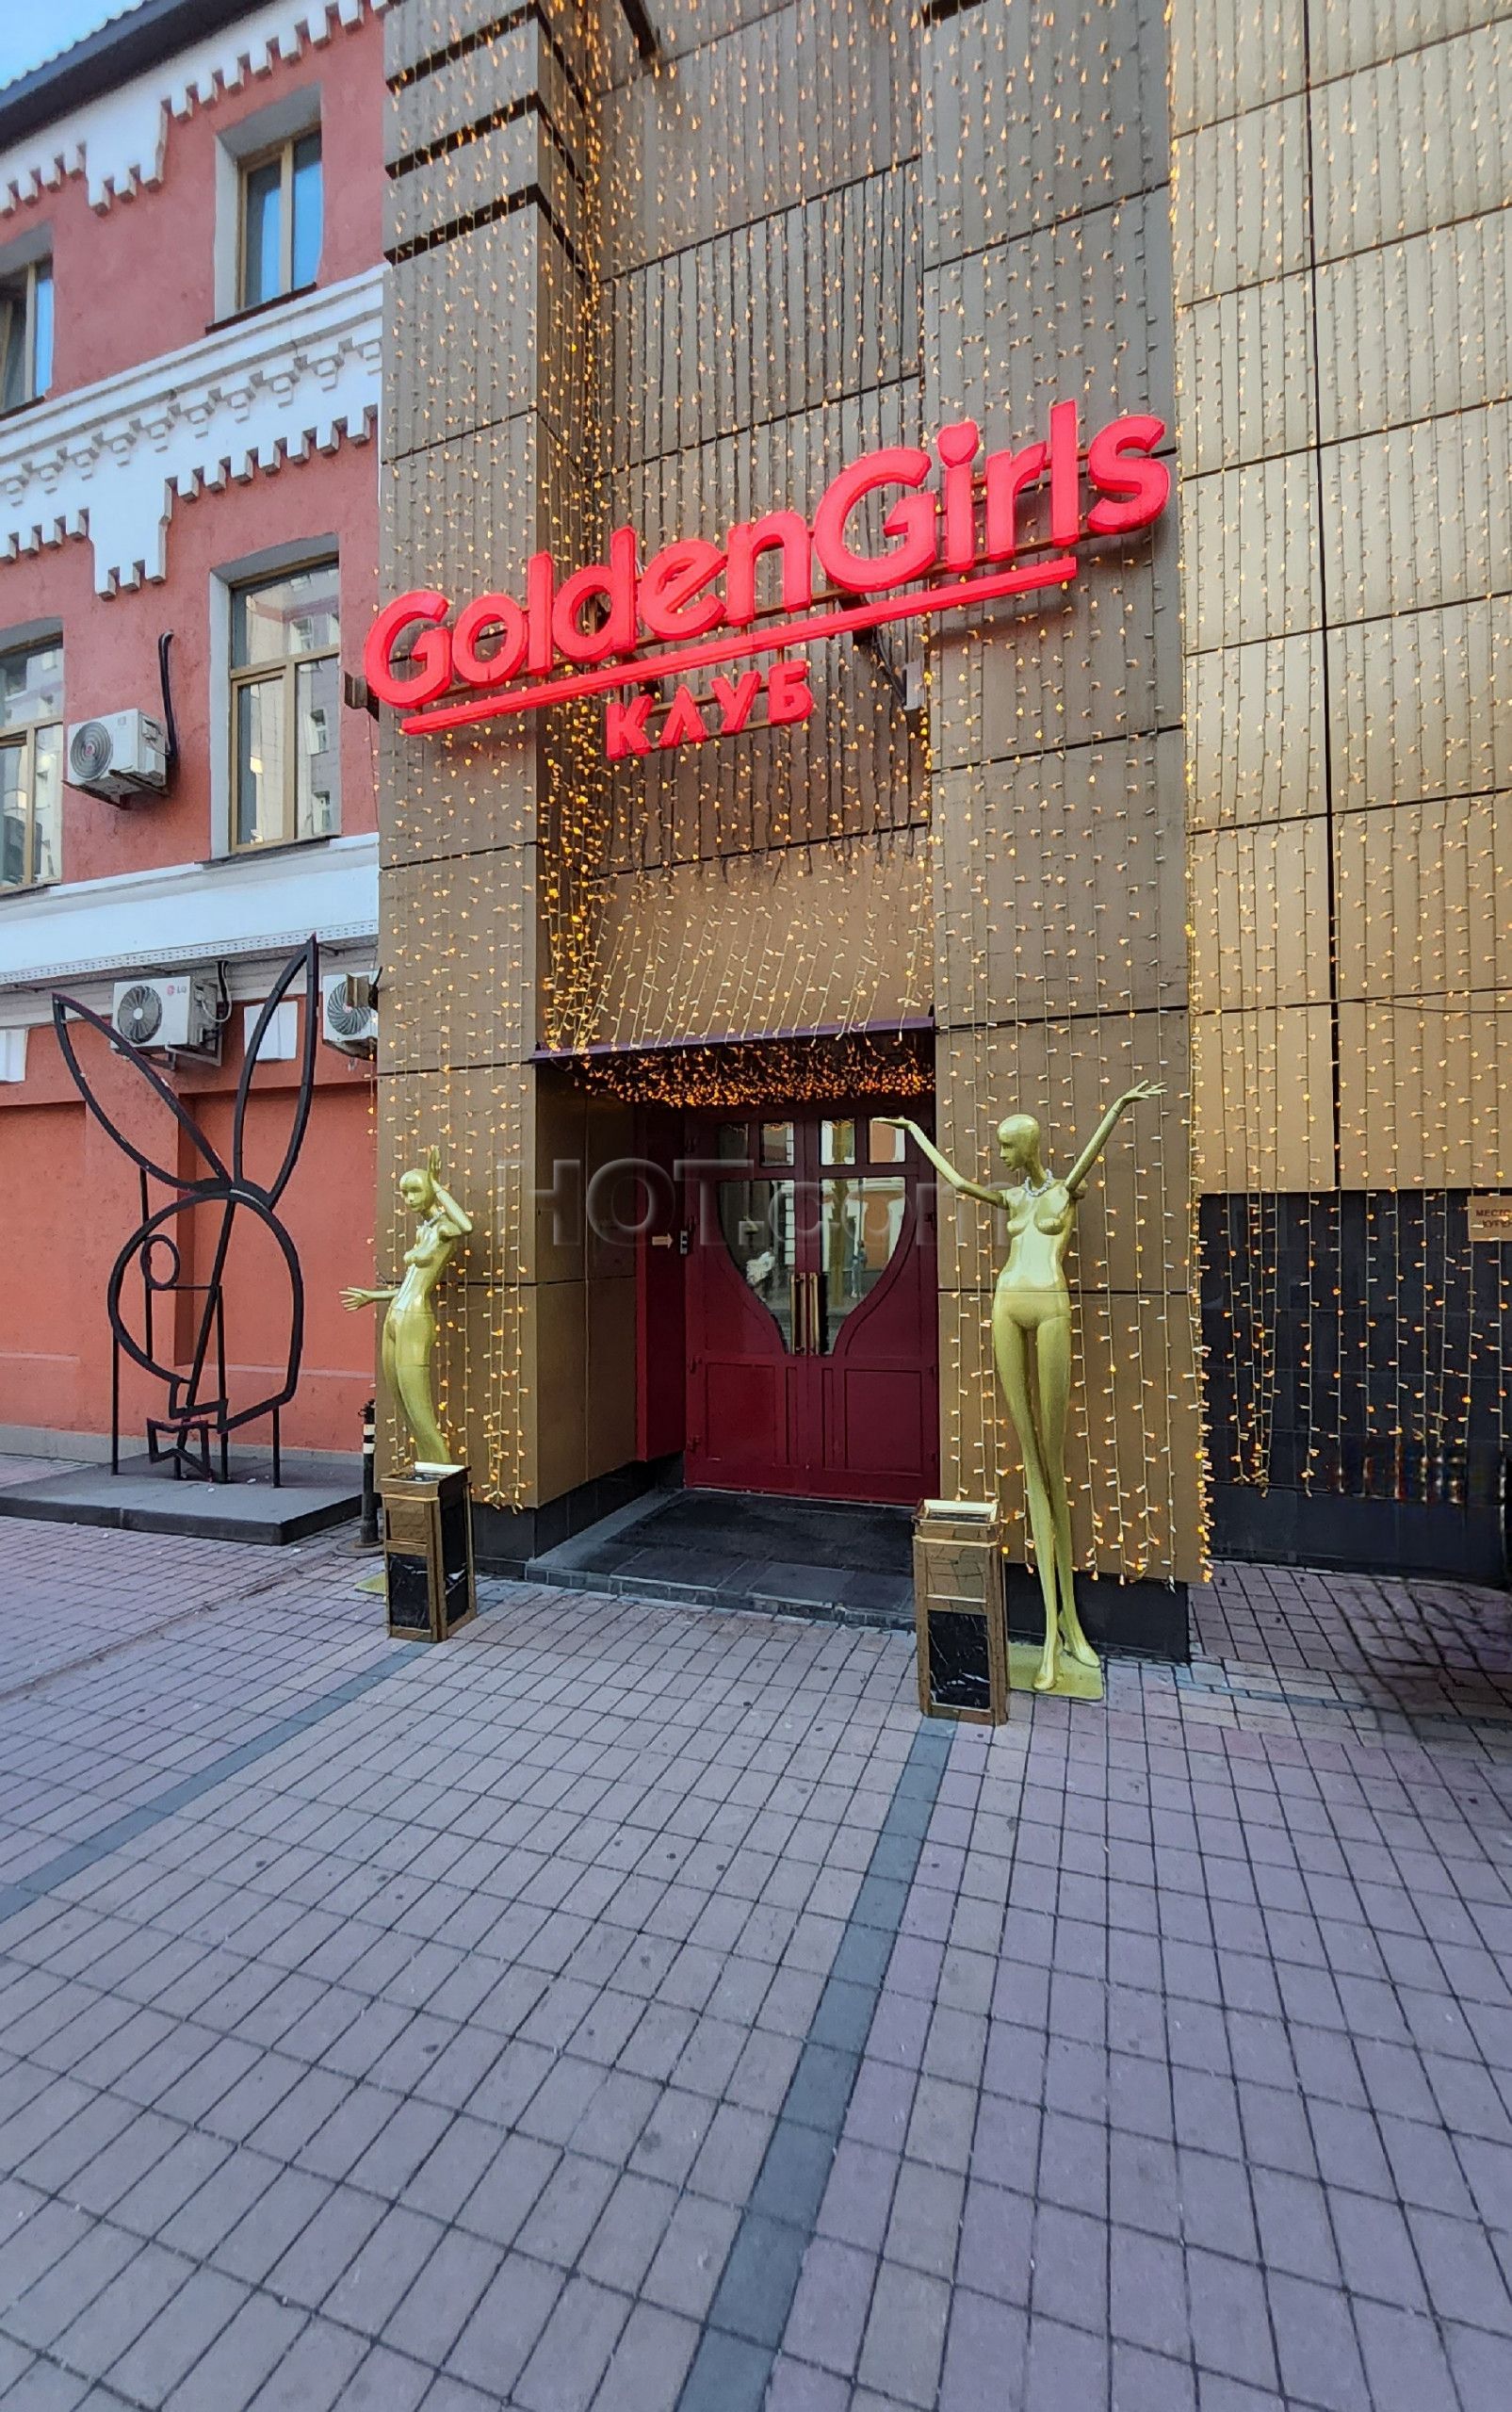 Moscow, Russia Golden Girls